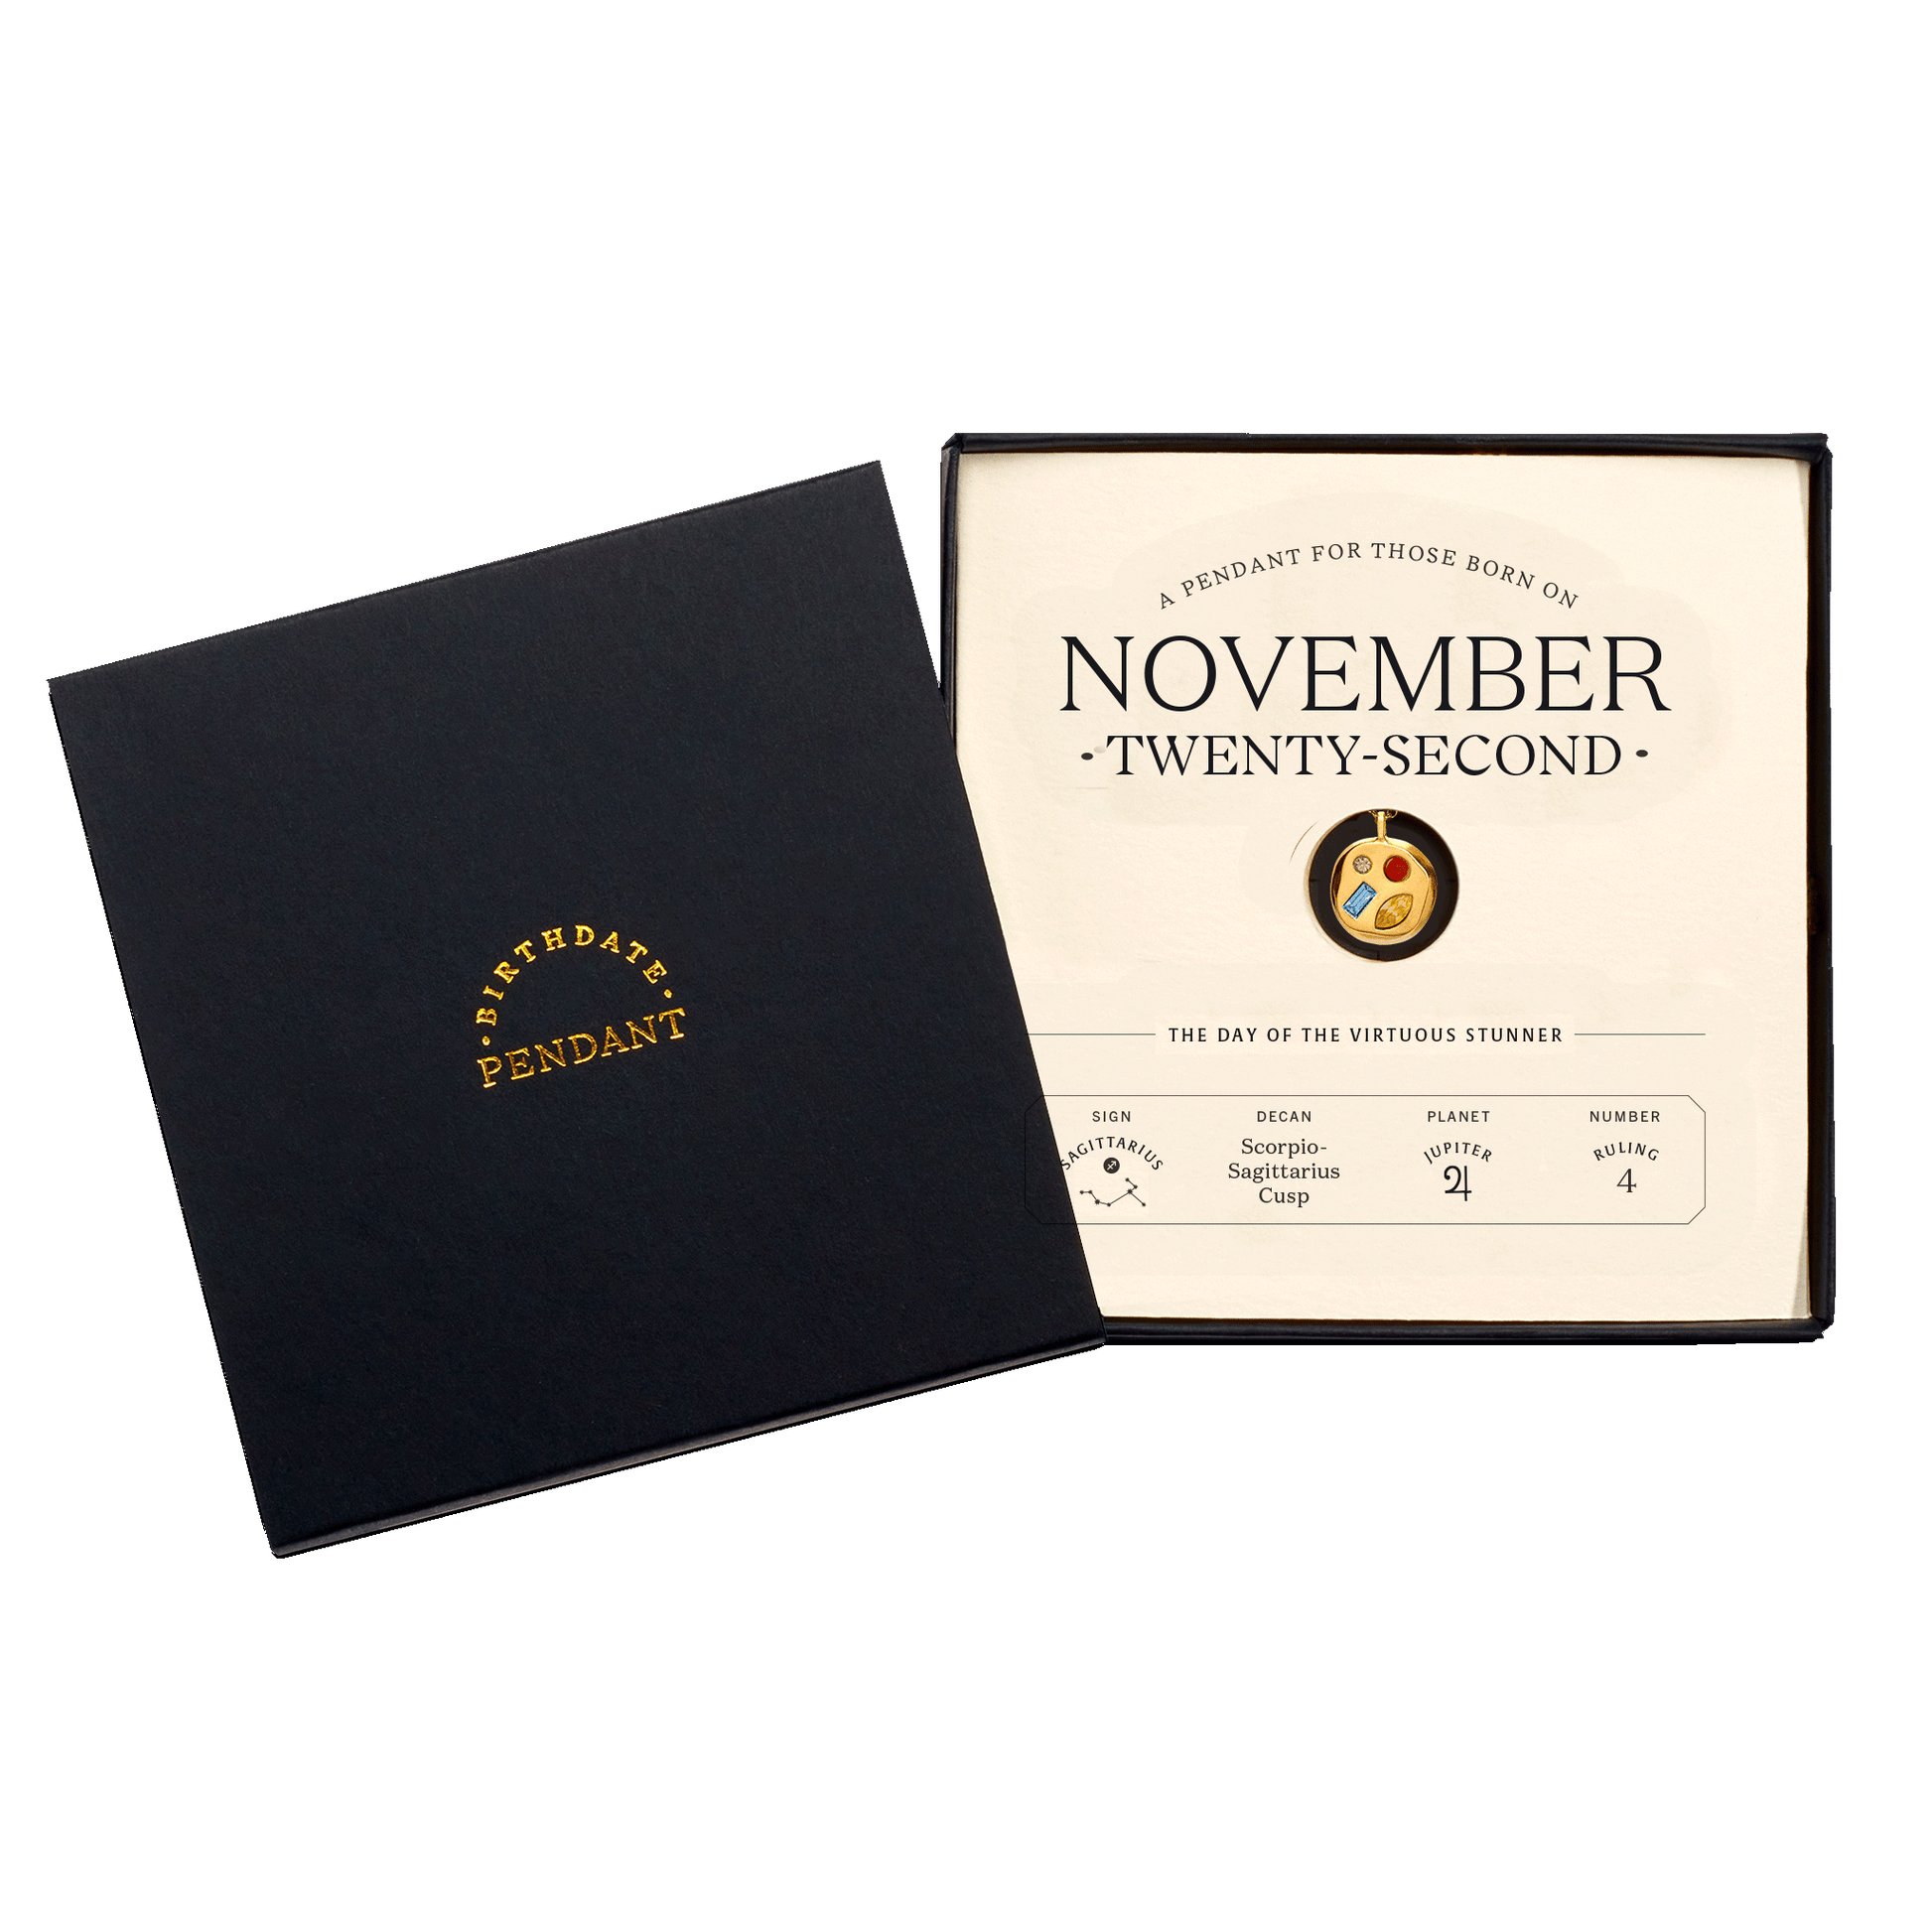 The November Twenty-Second Pendant inside its box